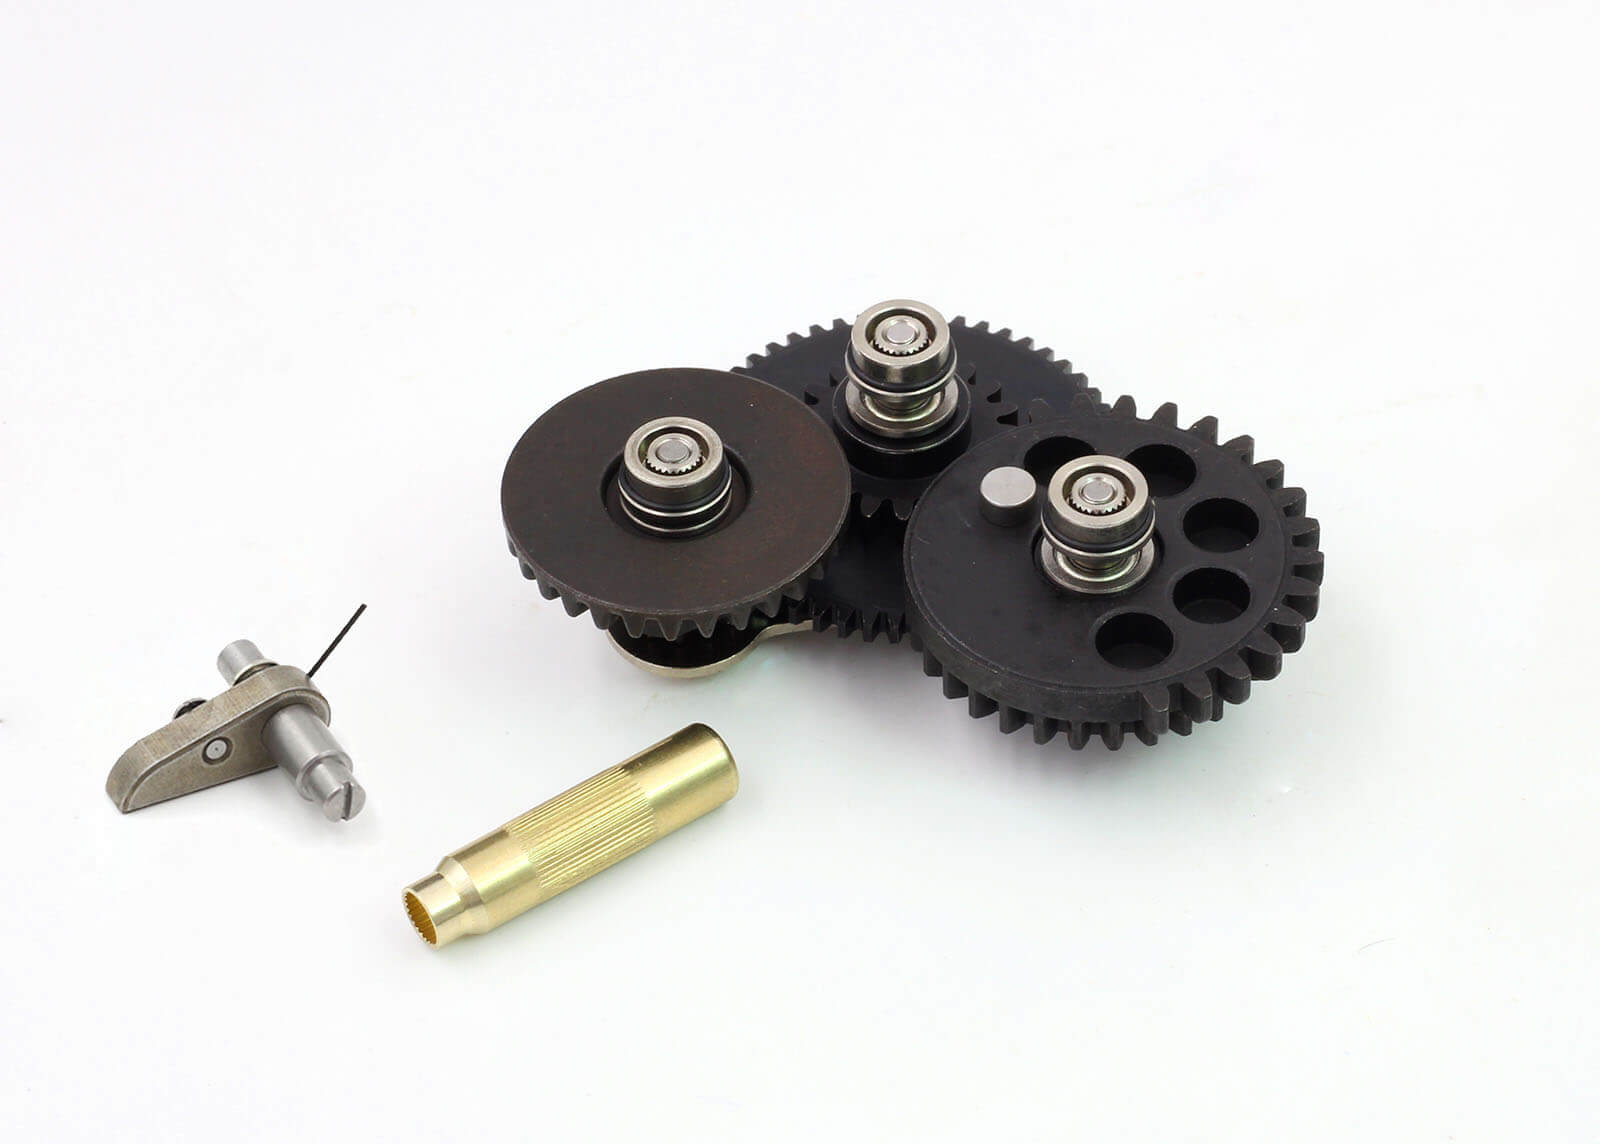 Modular Gear Set - SMOOTH 8mm Ver.2/Ver.3, Torque 21.6:1 + Gear Key - Modify